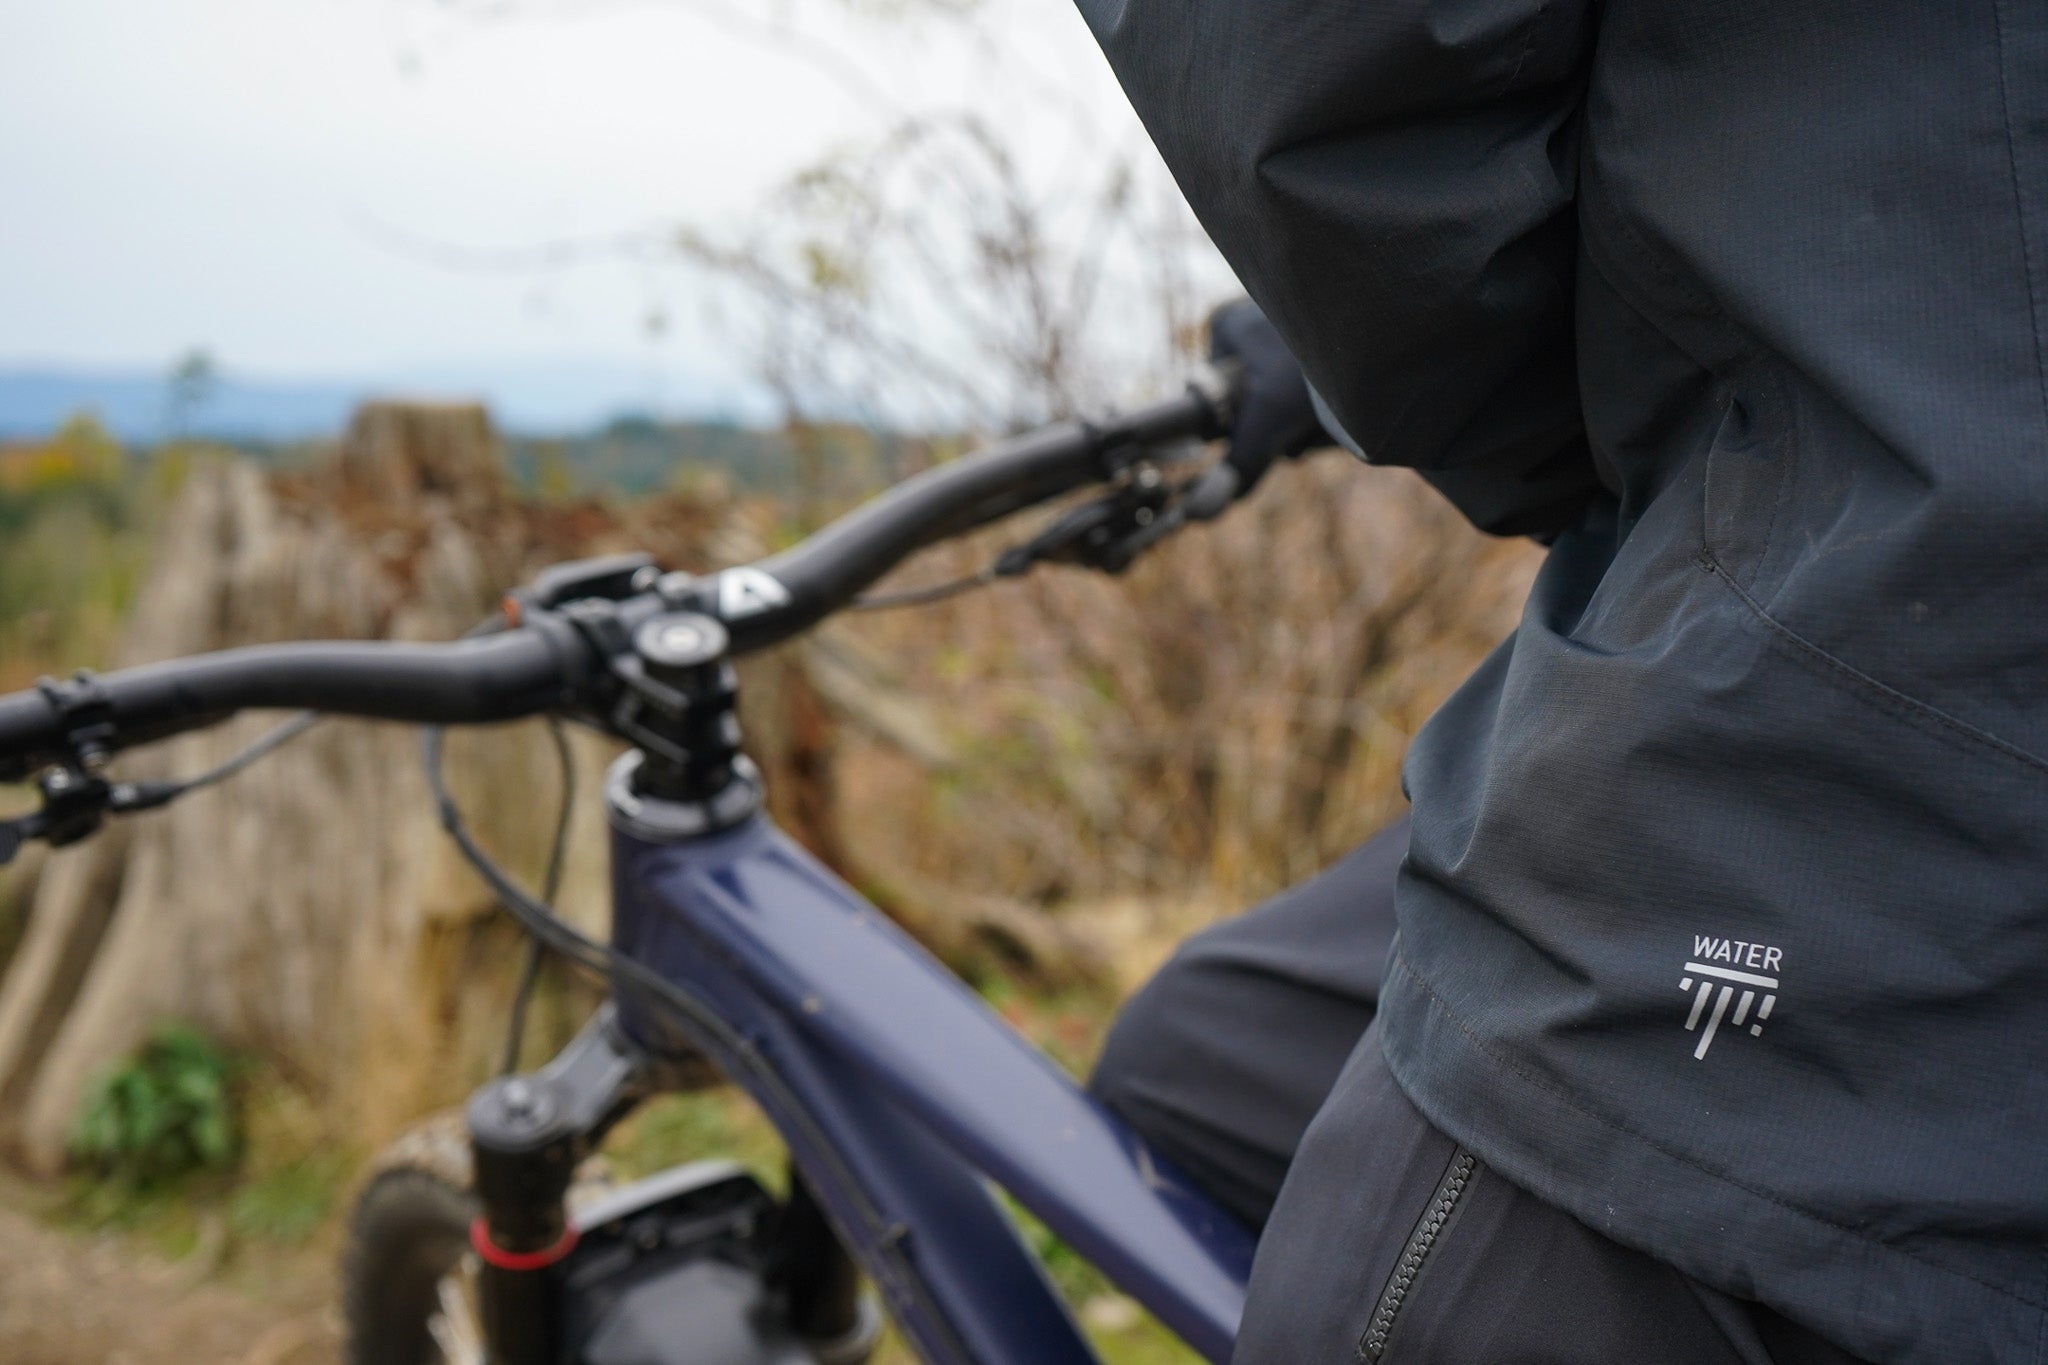 The Fox Defend waterproof mountain biking apparel